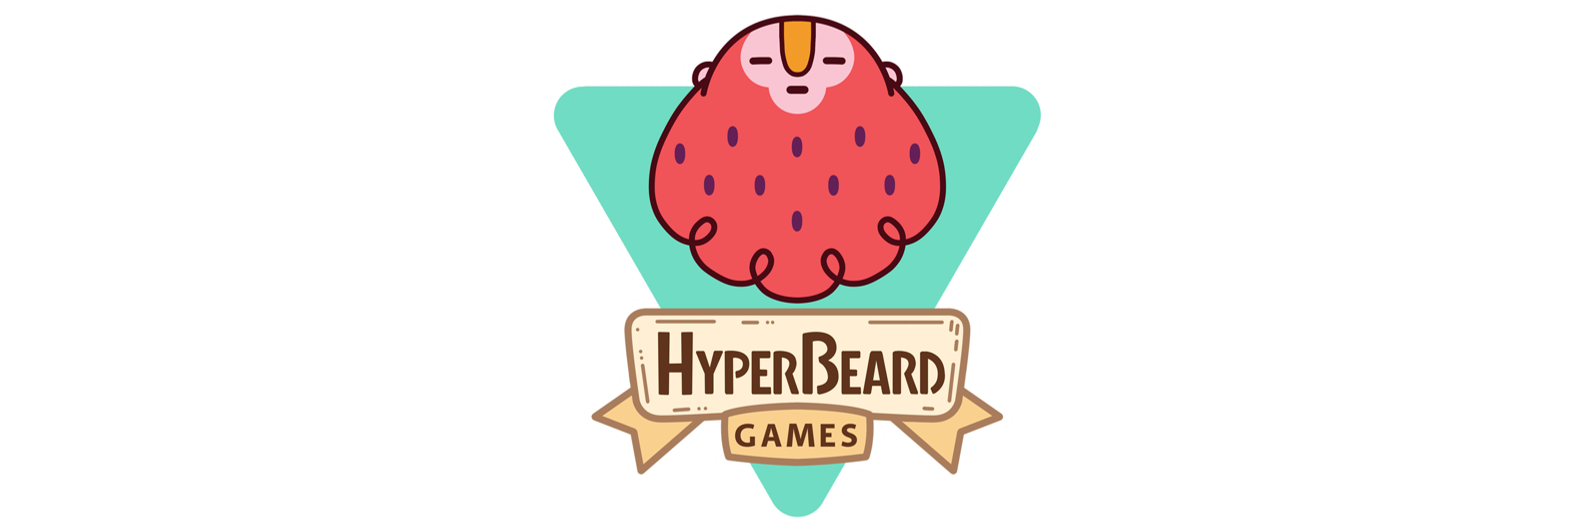 Hyperbeard